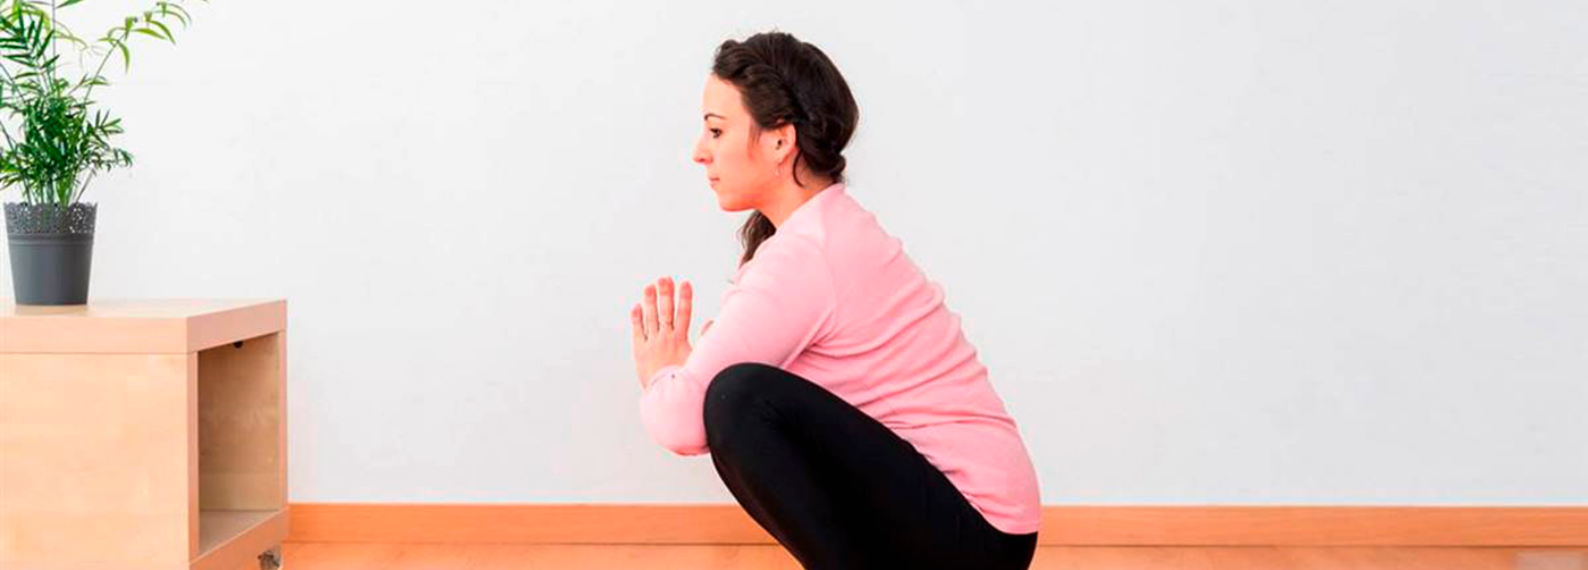 Ejercicios de yoga para embarazadas: Segundo trimestre (2/3)